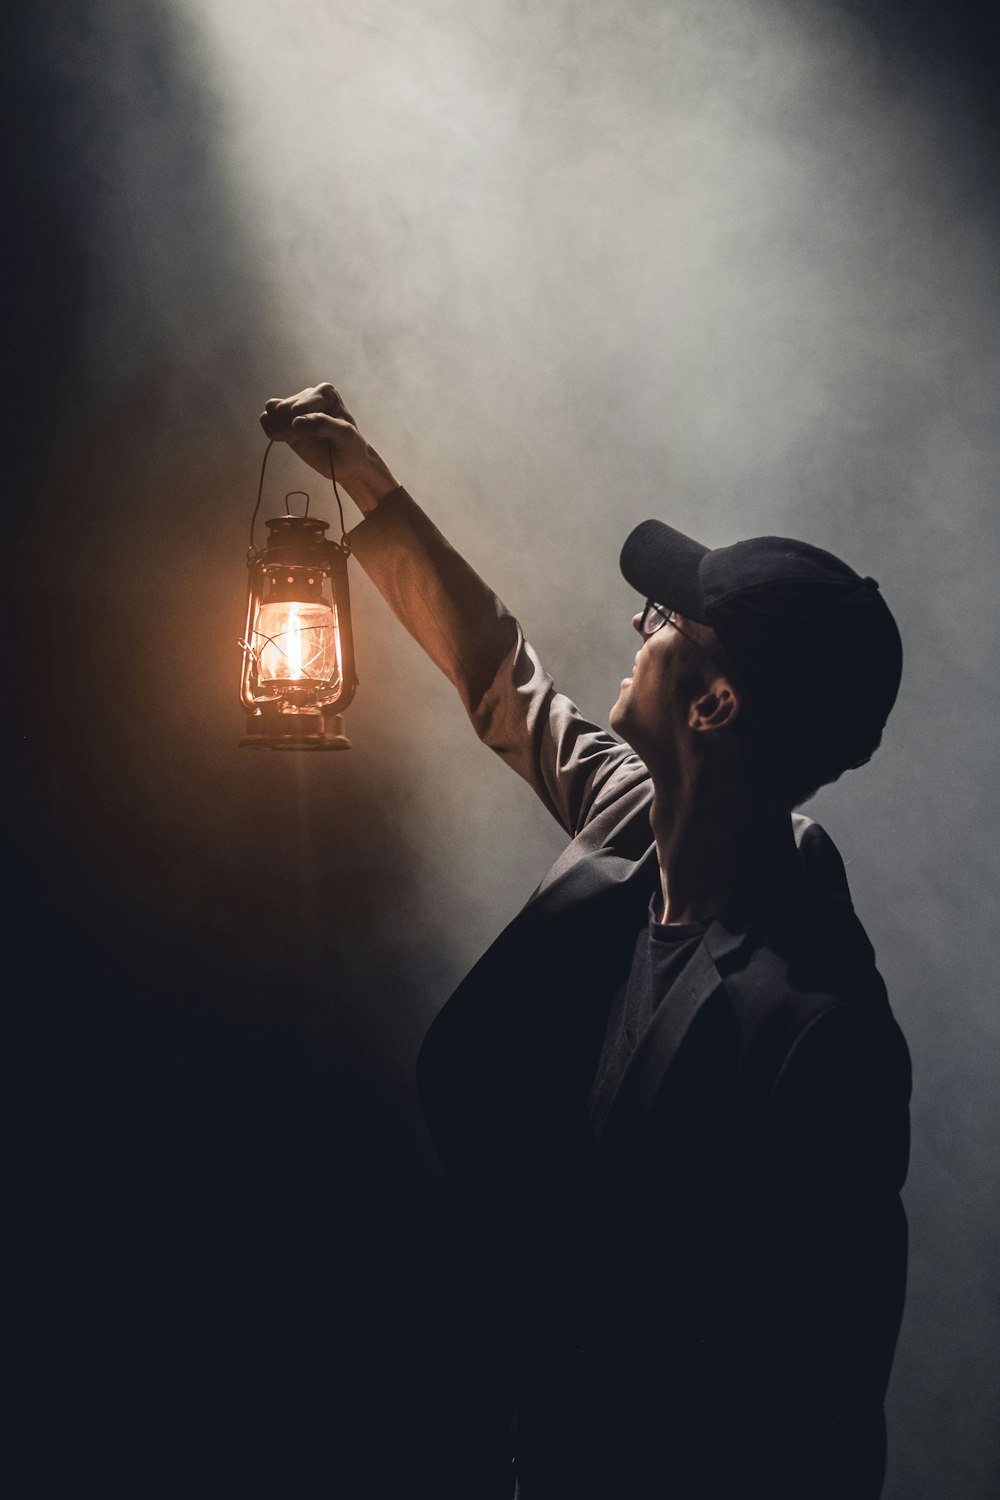 man holding lighted gas lantern photo – Free People Image on Unsplash